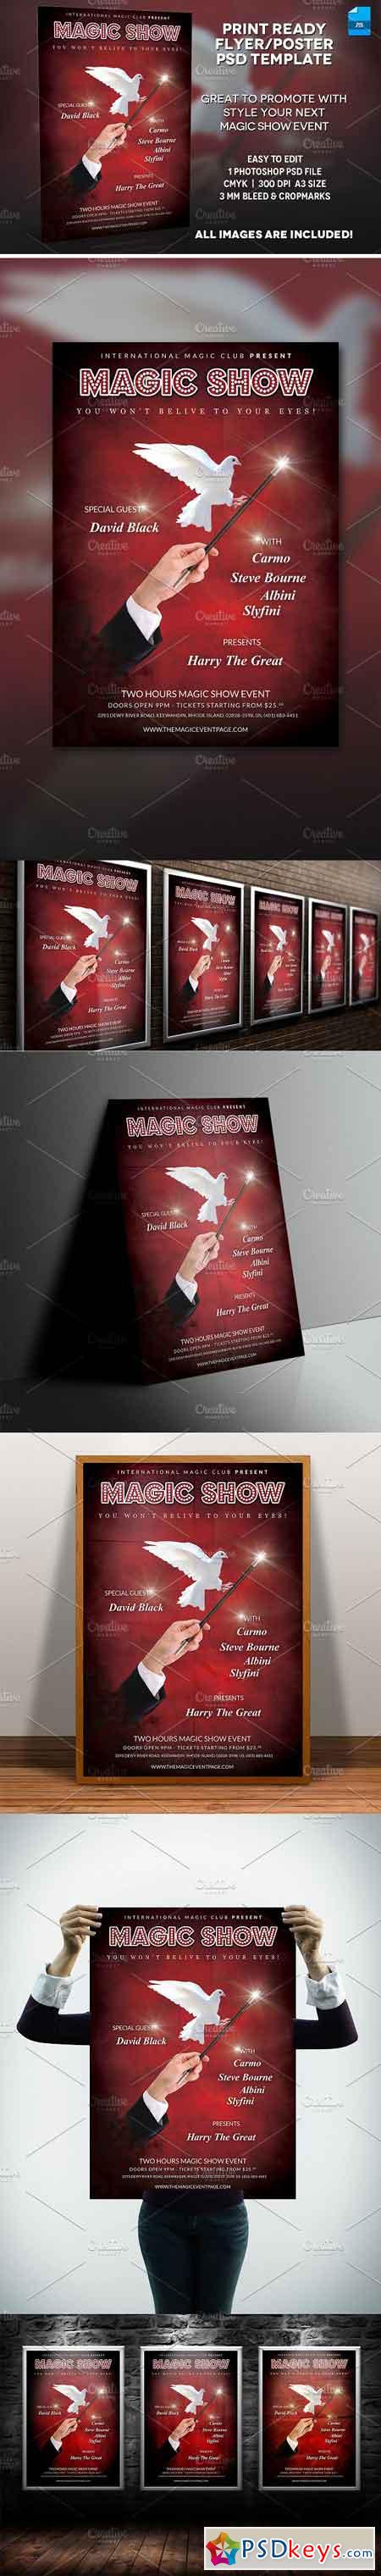 Magician Poster Print Template v.3 282924